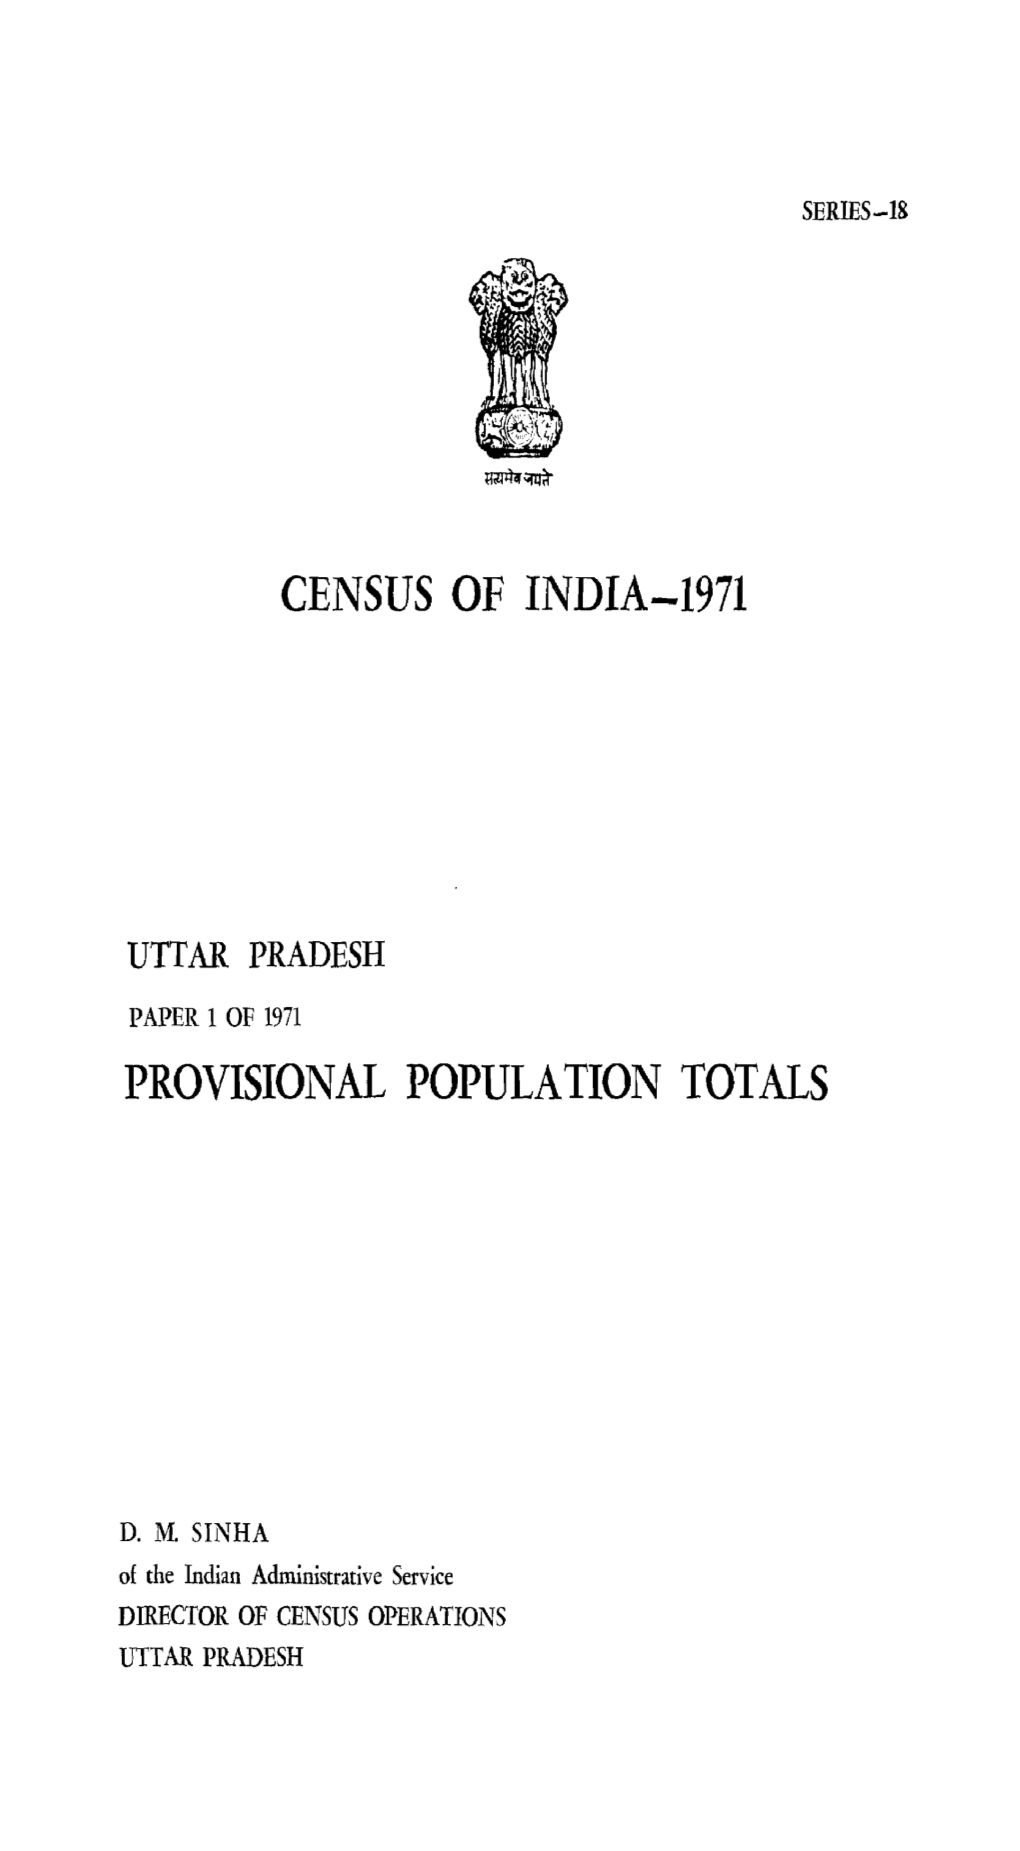 Provisional Population Totals, Uttar Pradesh